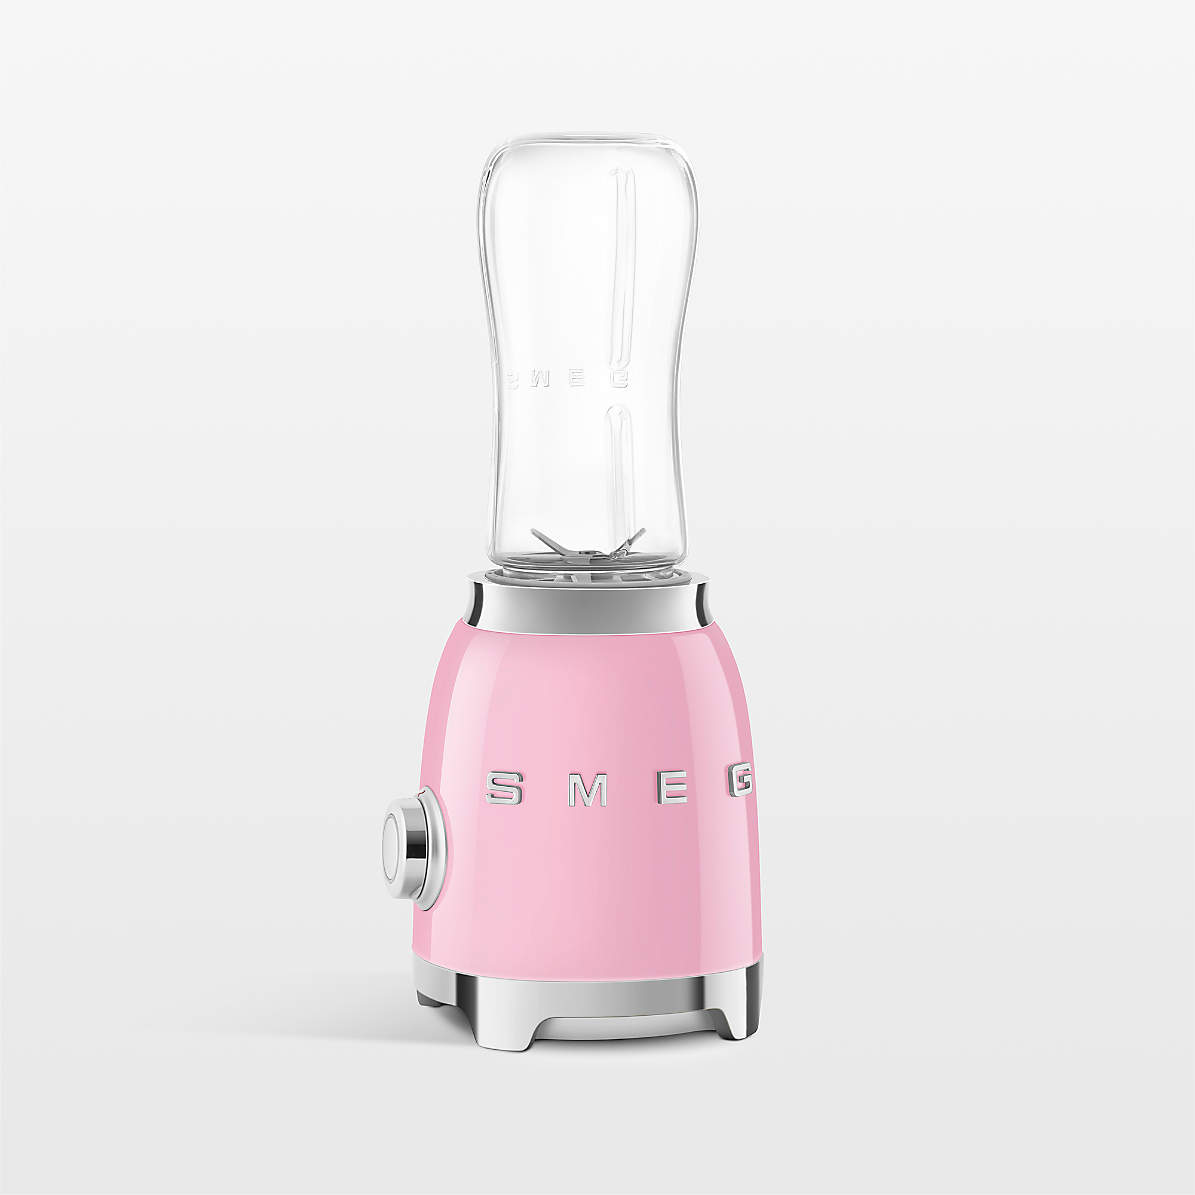 Smeg Pink Personal Blender + Reviews